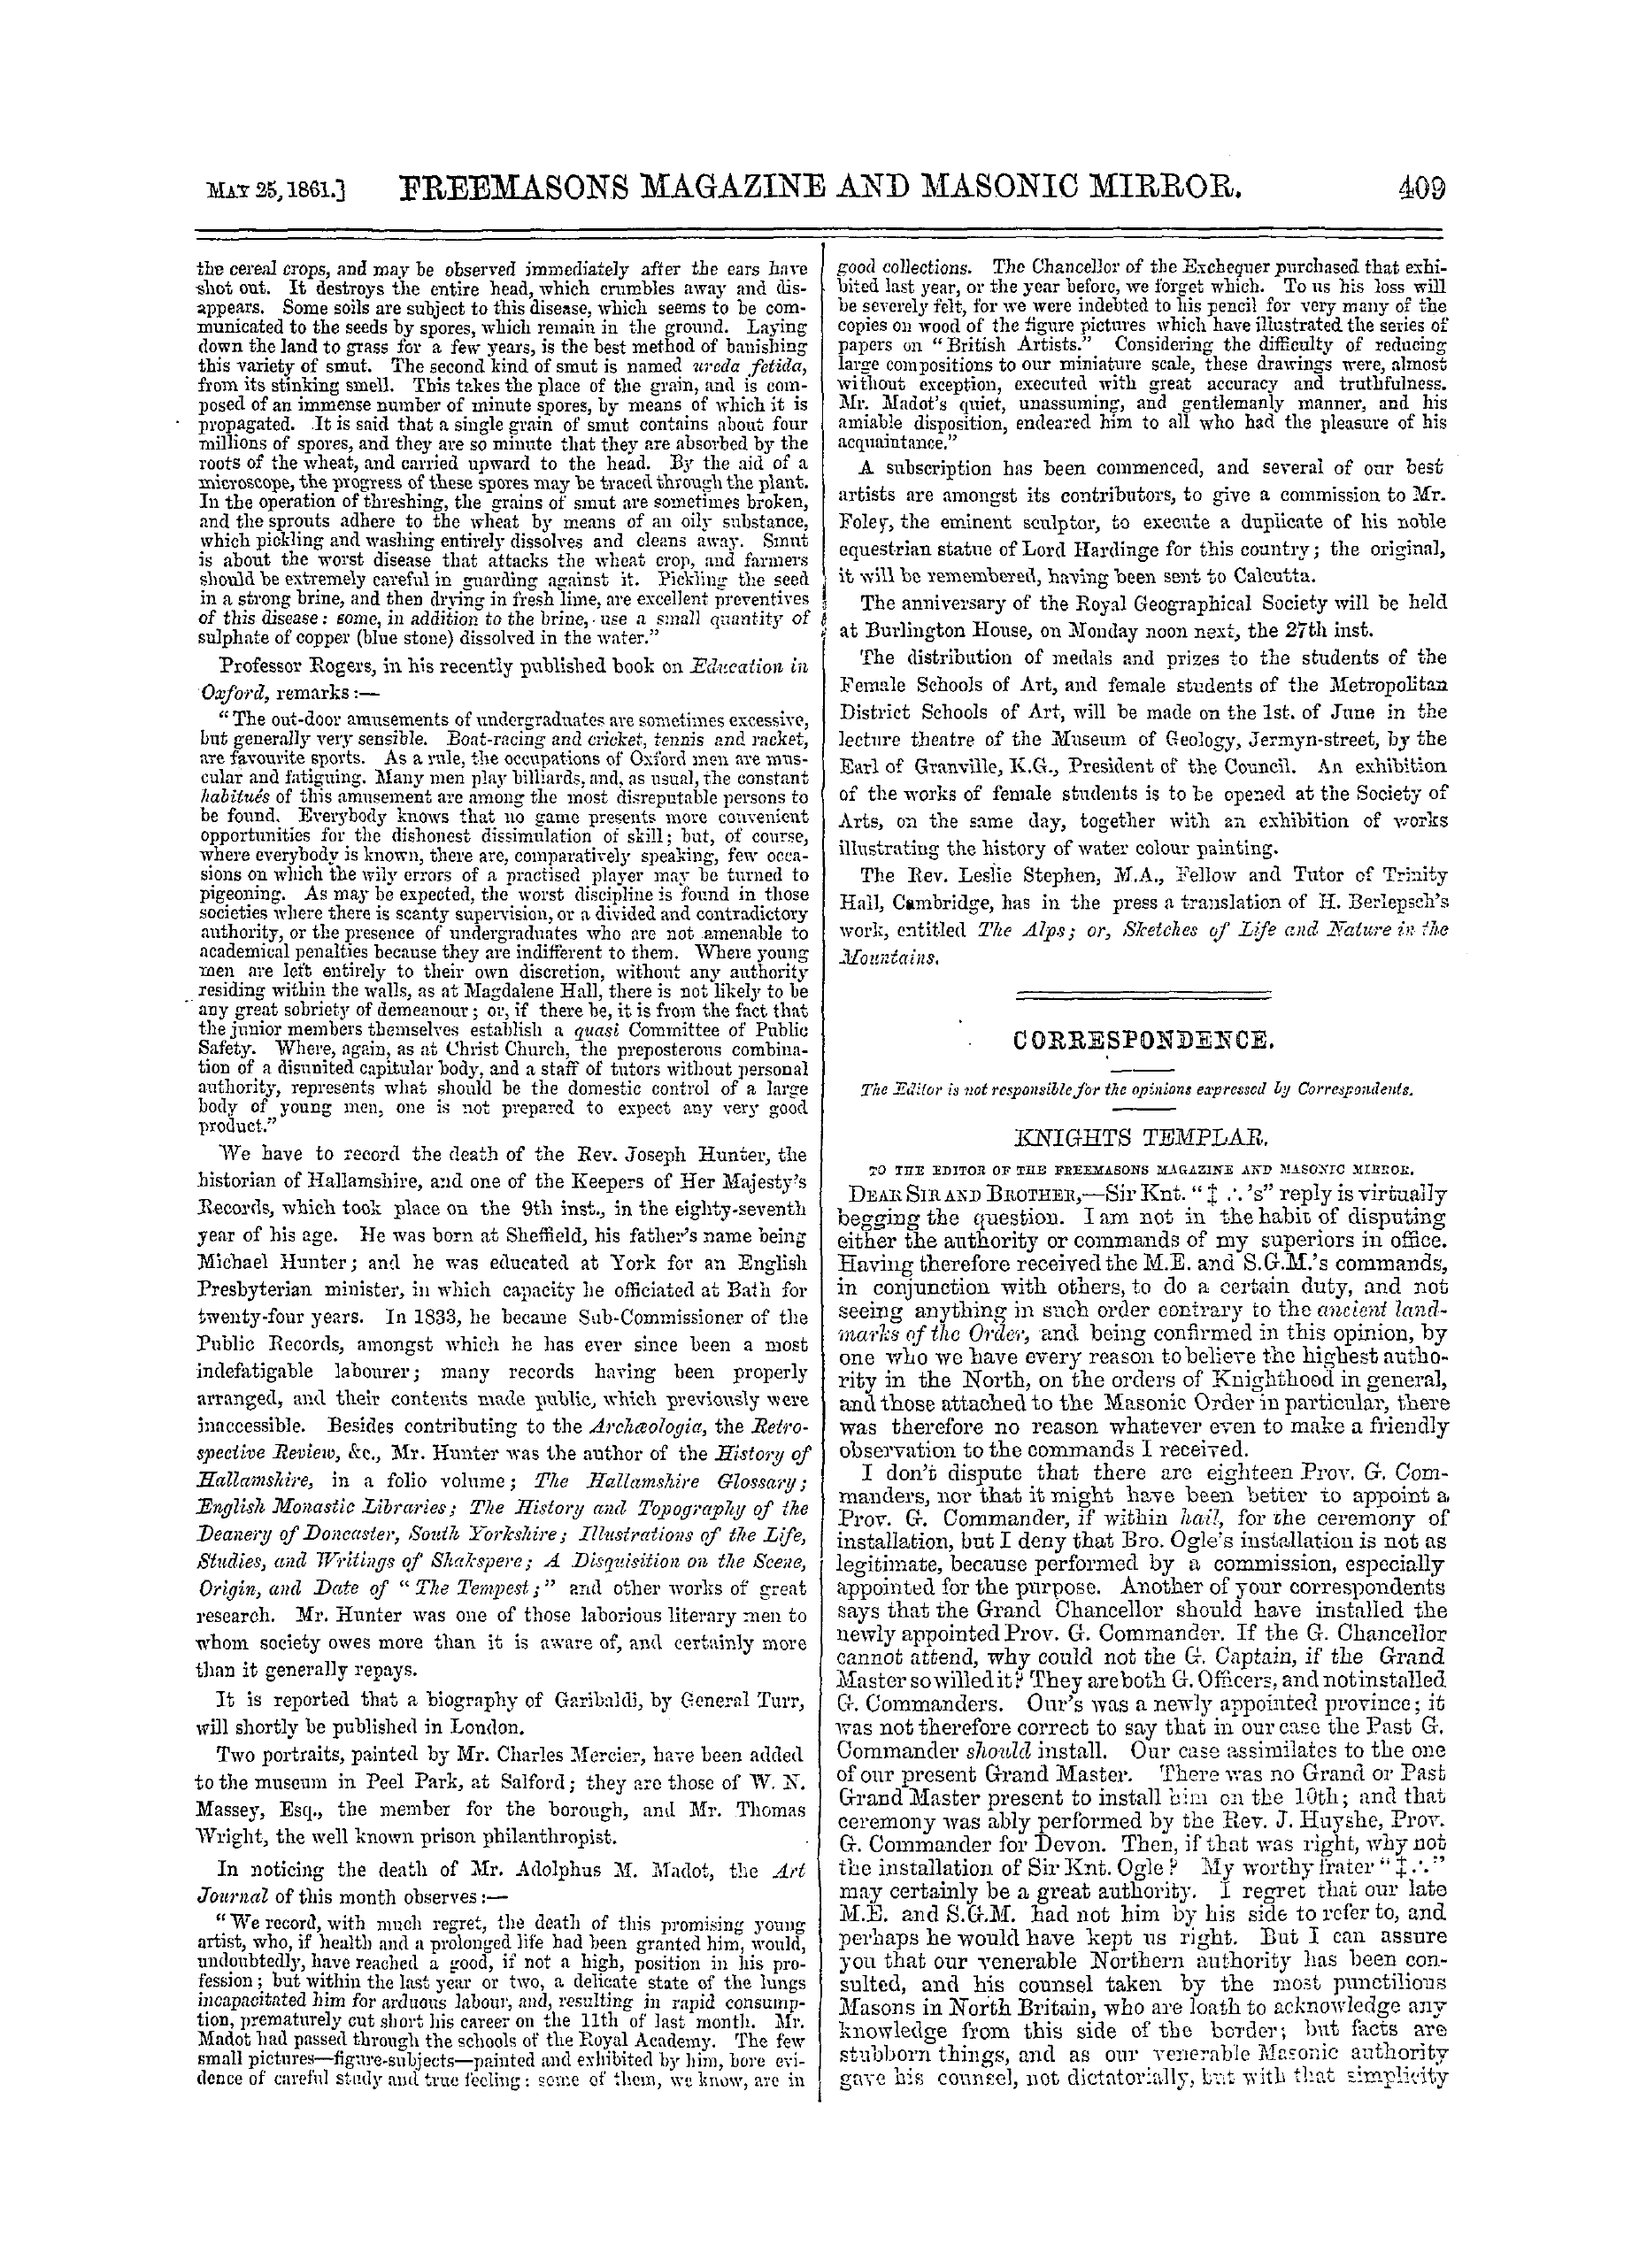 The Freemasons' Monthly Magazine: 1861-05-25 - Correspondence.